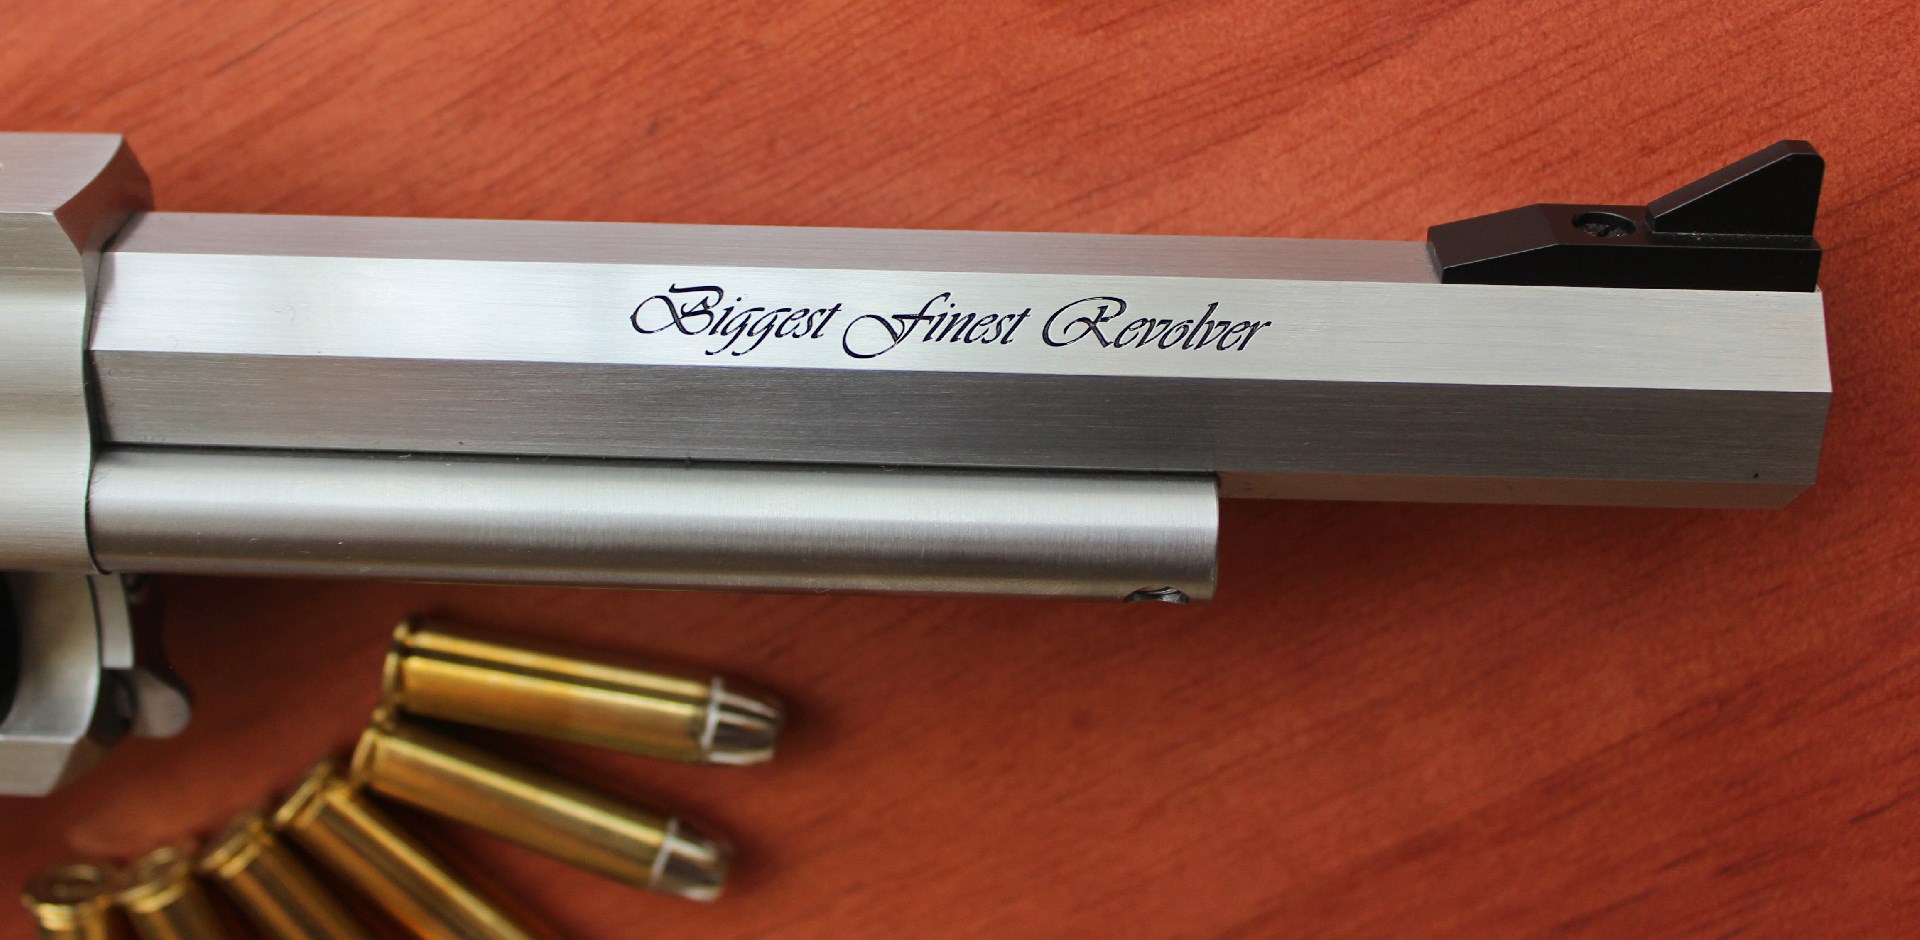 Magnum Research BFR biggest finest revolver script engraving stainless steel gun barrel revolver